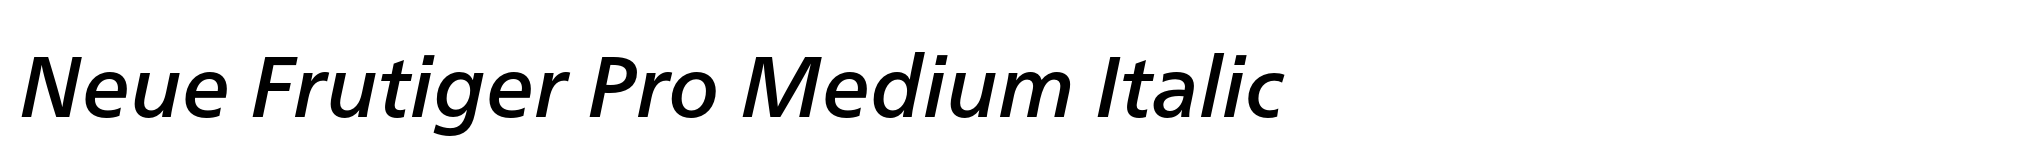 Neue Frutiger Pro Medium Italic image